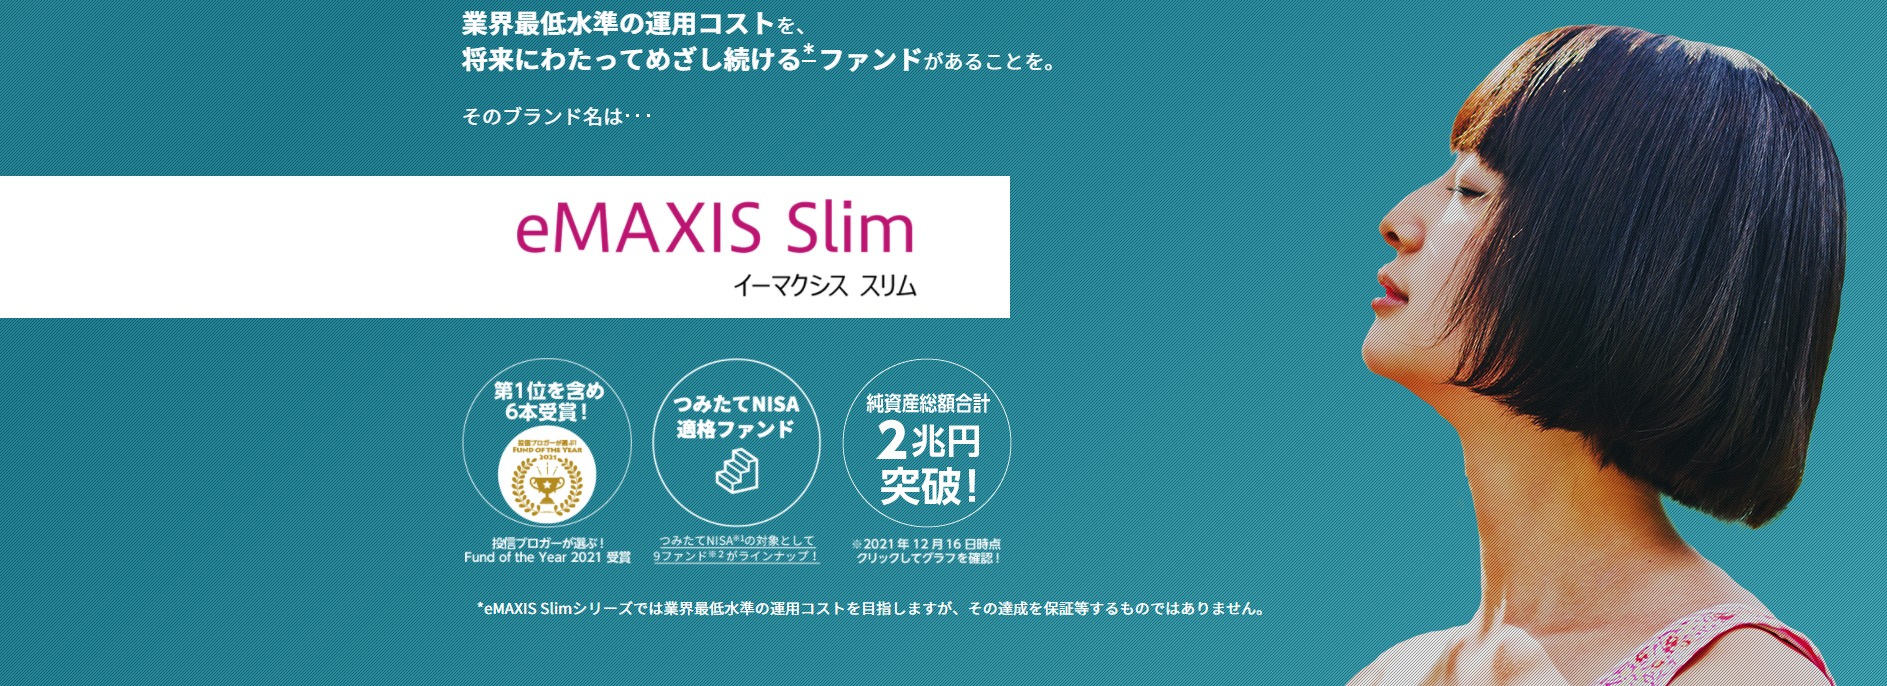 emaxis slim バランス(8資産均等型)